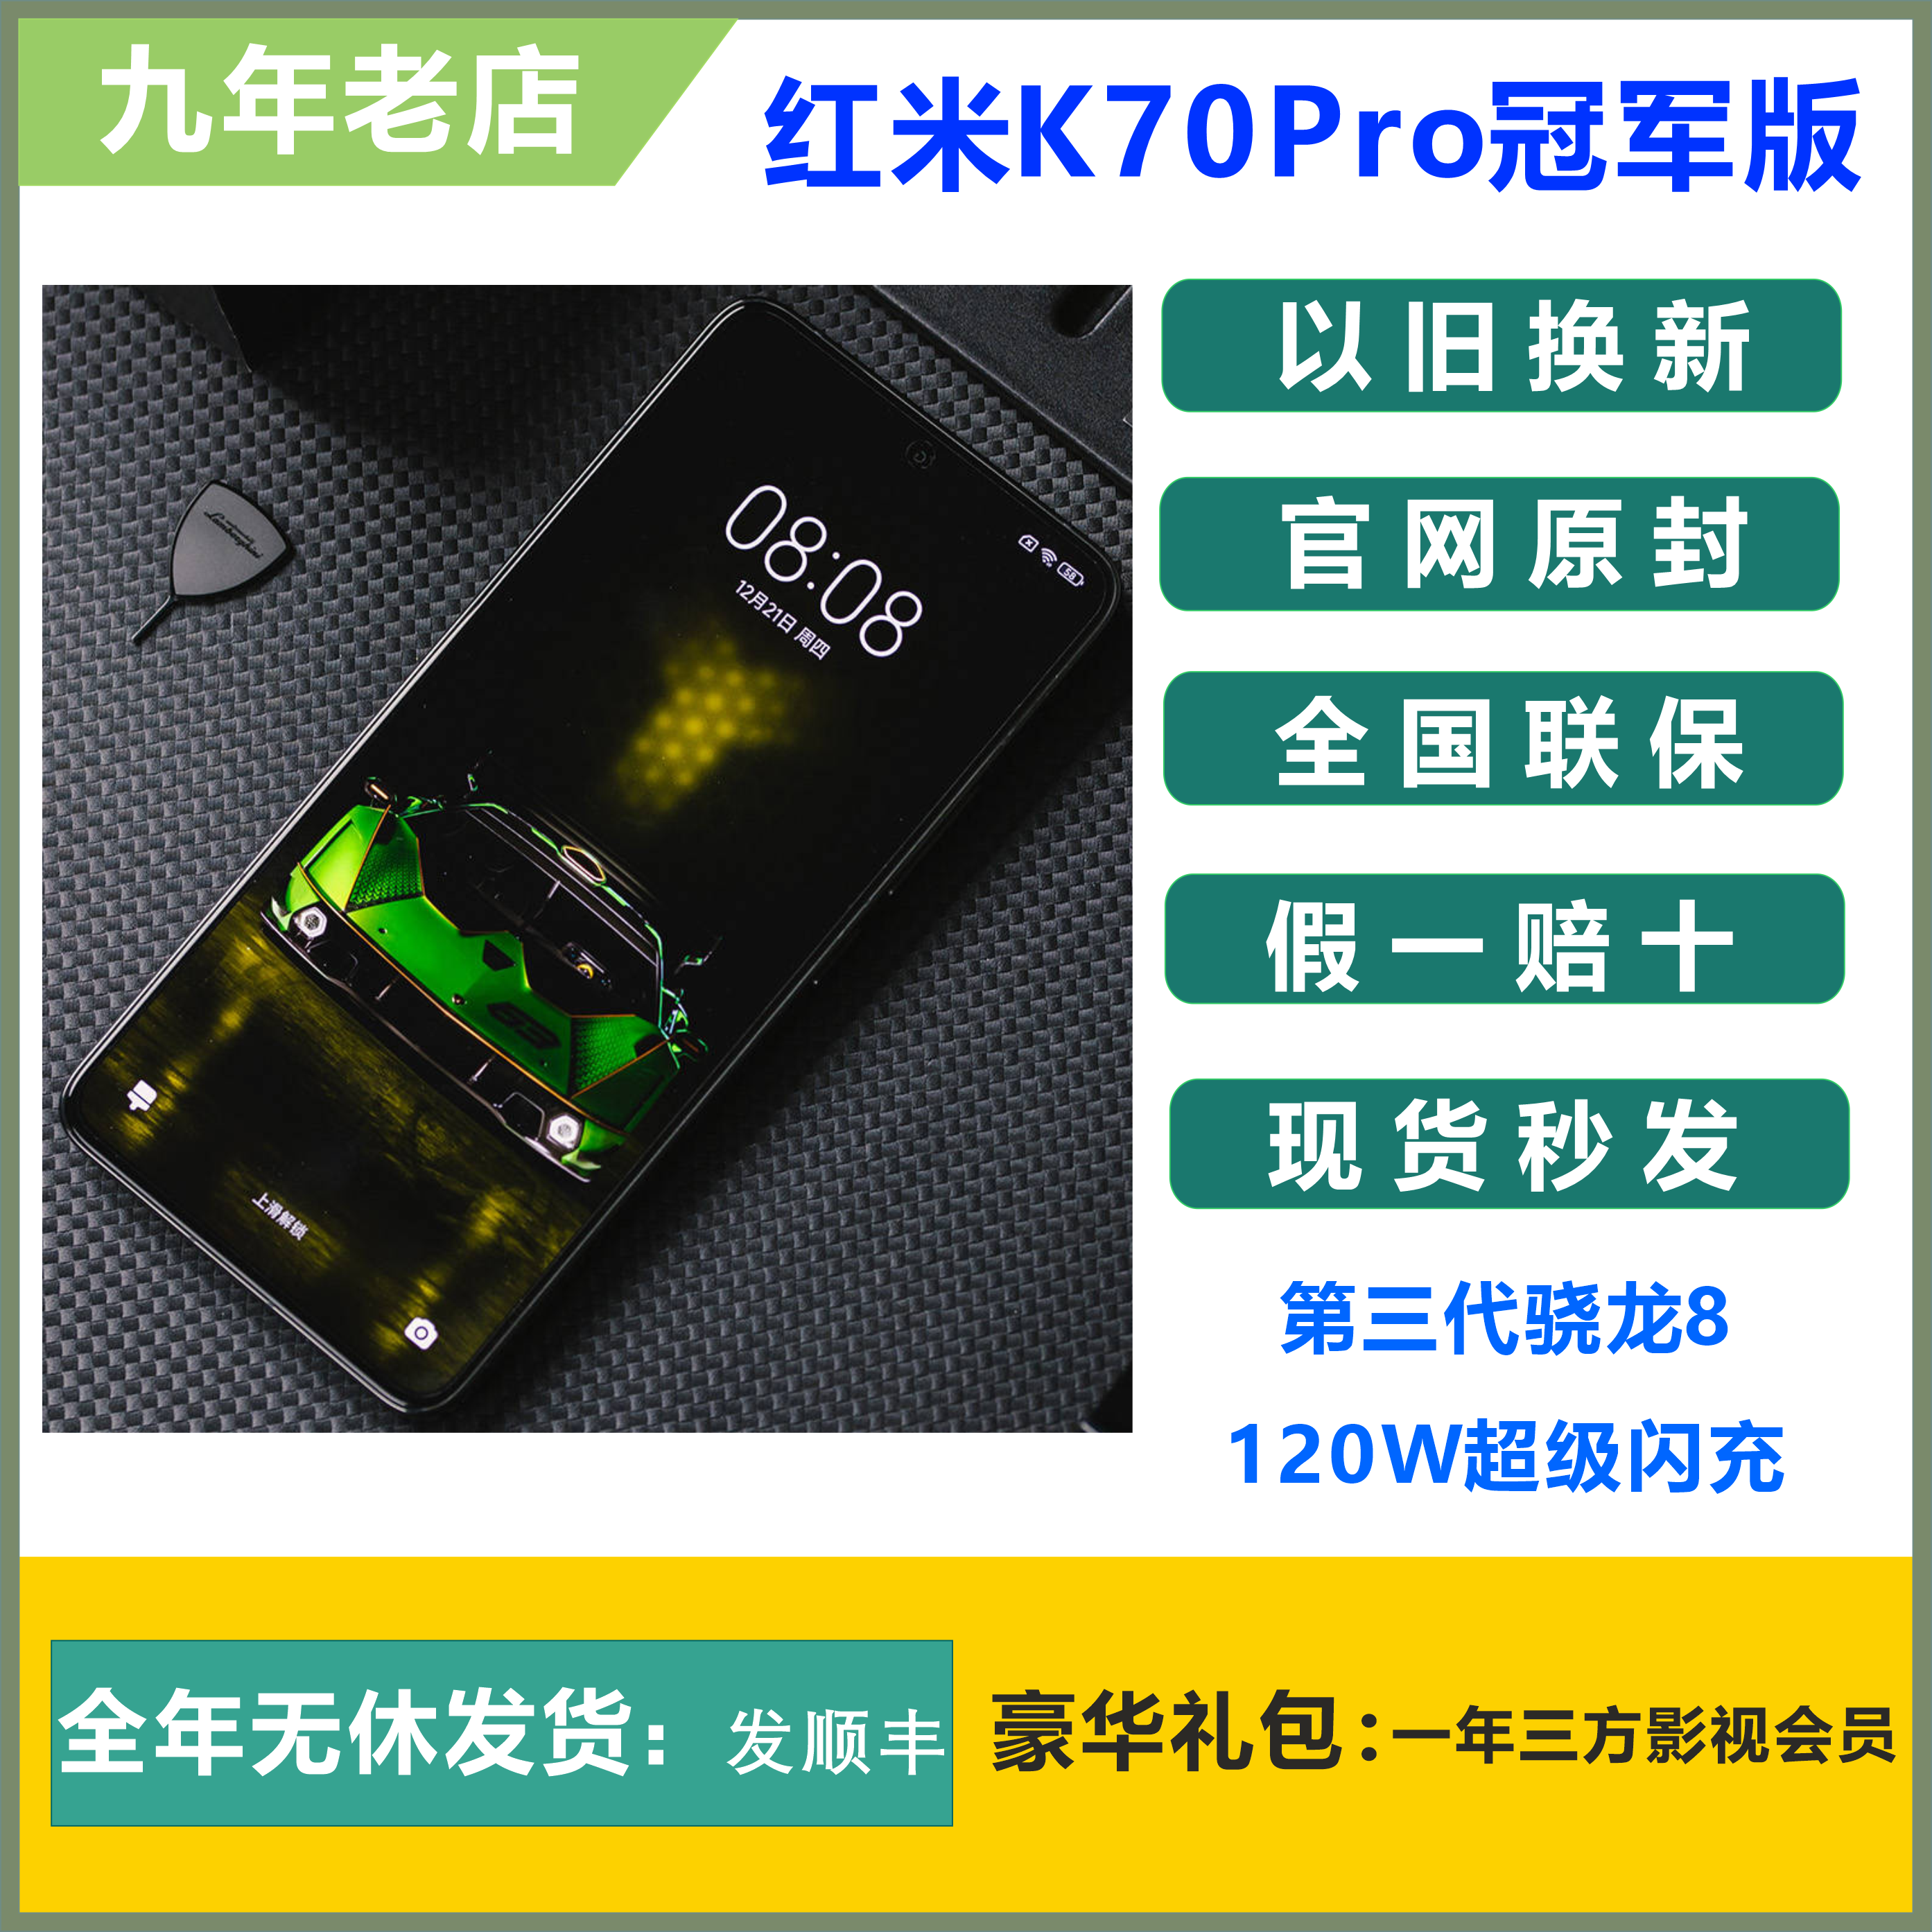 MIUI/小米 Redmi K70 Pro冠军版兰博基尼限量款限定版红米K70Pro